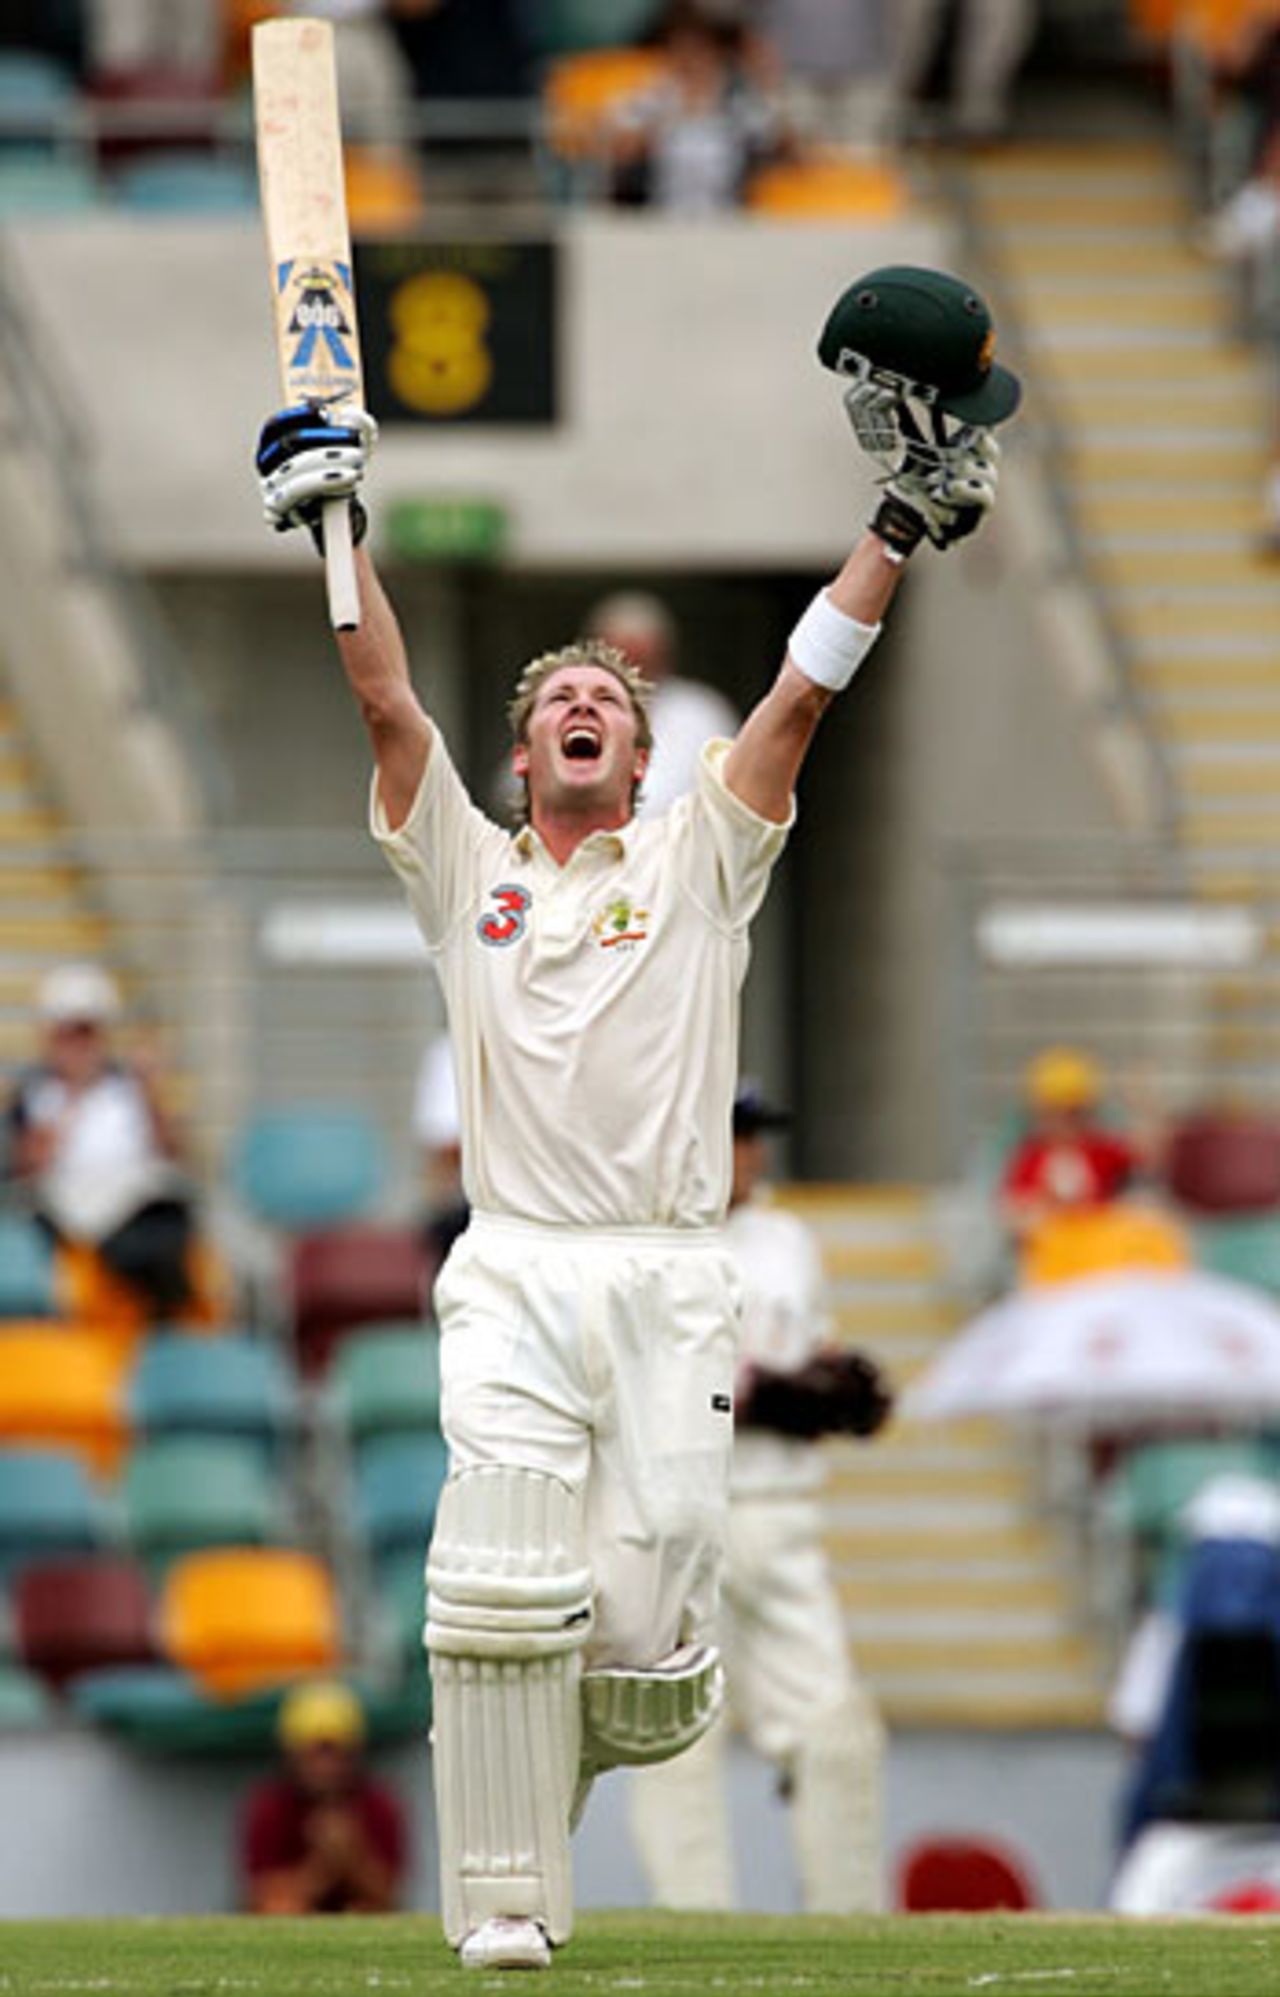 A jubilant Michael Clarke completes his first home hundred, Australia v New Zealand, 1st Test, Brisbane, November 20, 2004